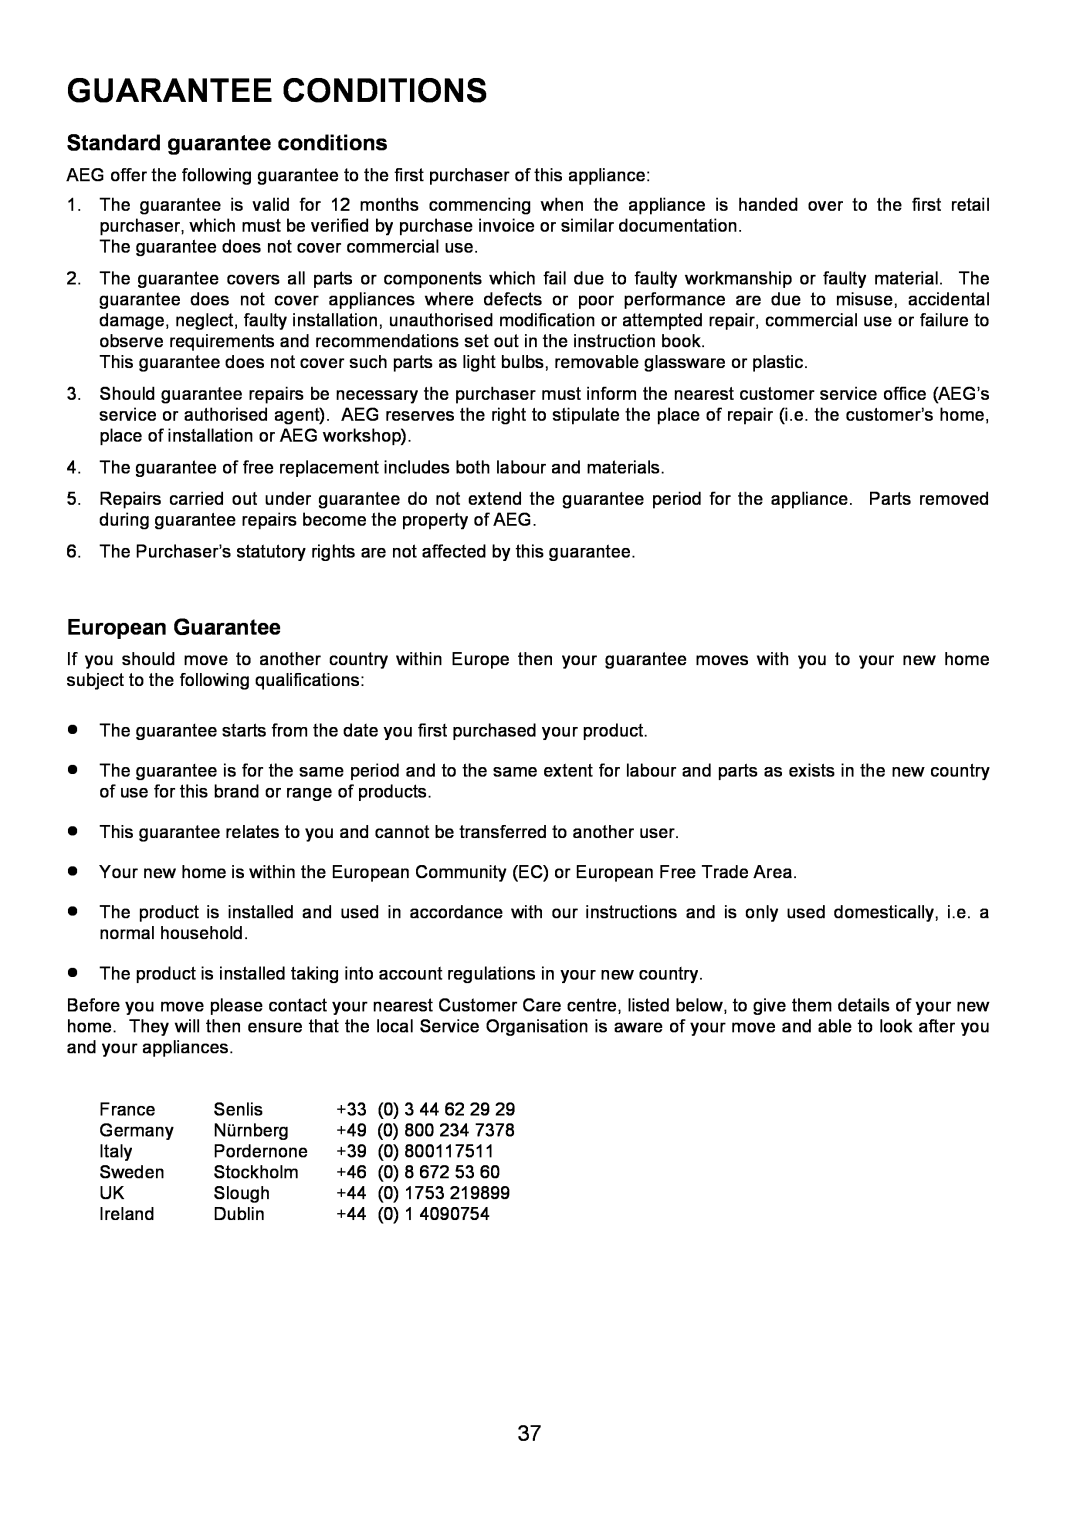 Electrolux D4101-4 operating instructions Guarantee Conditions, Standard guarantee conditions, European Guarantee 